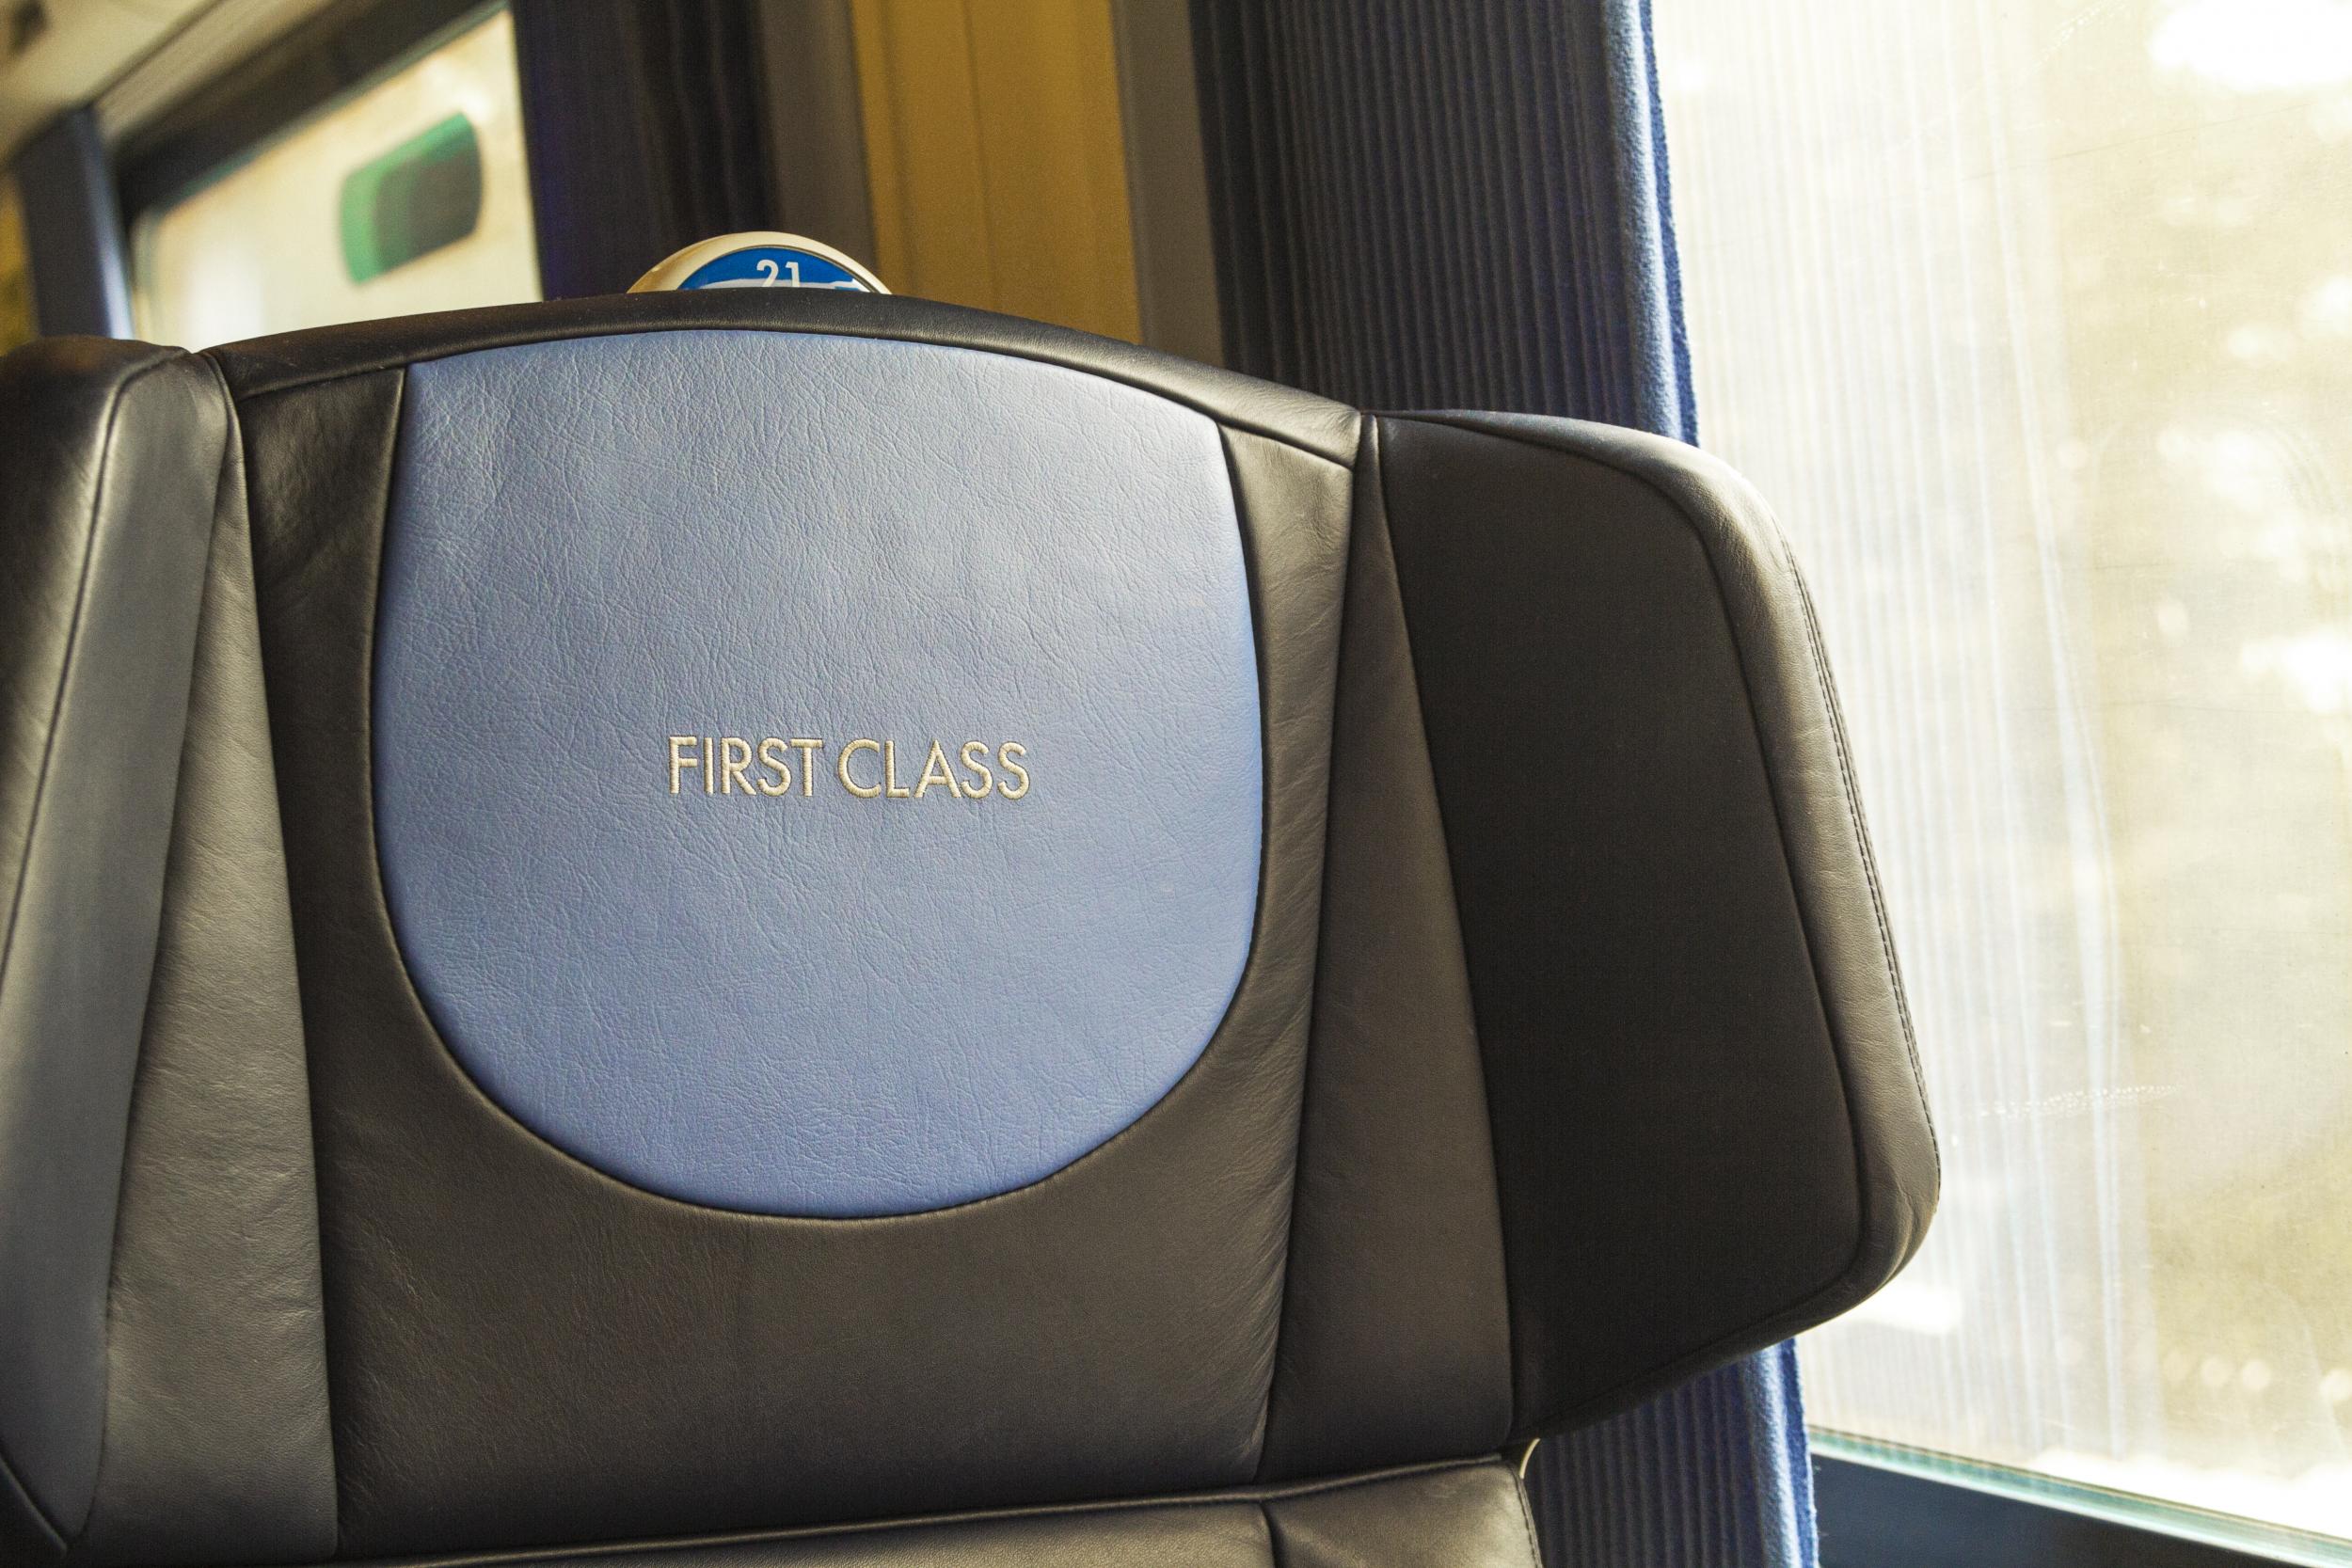 First class rail travel isn't always for an elite minority